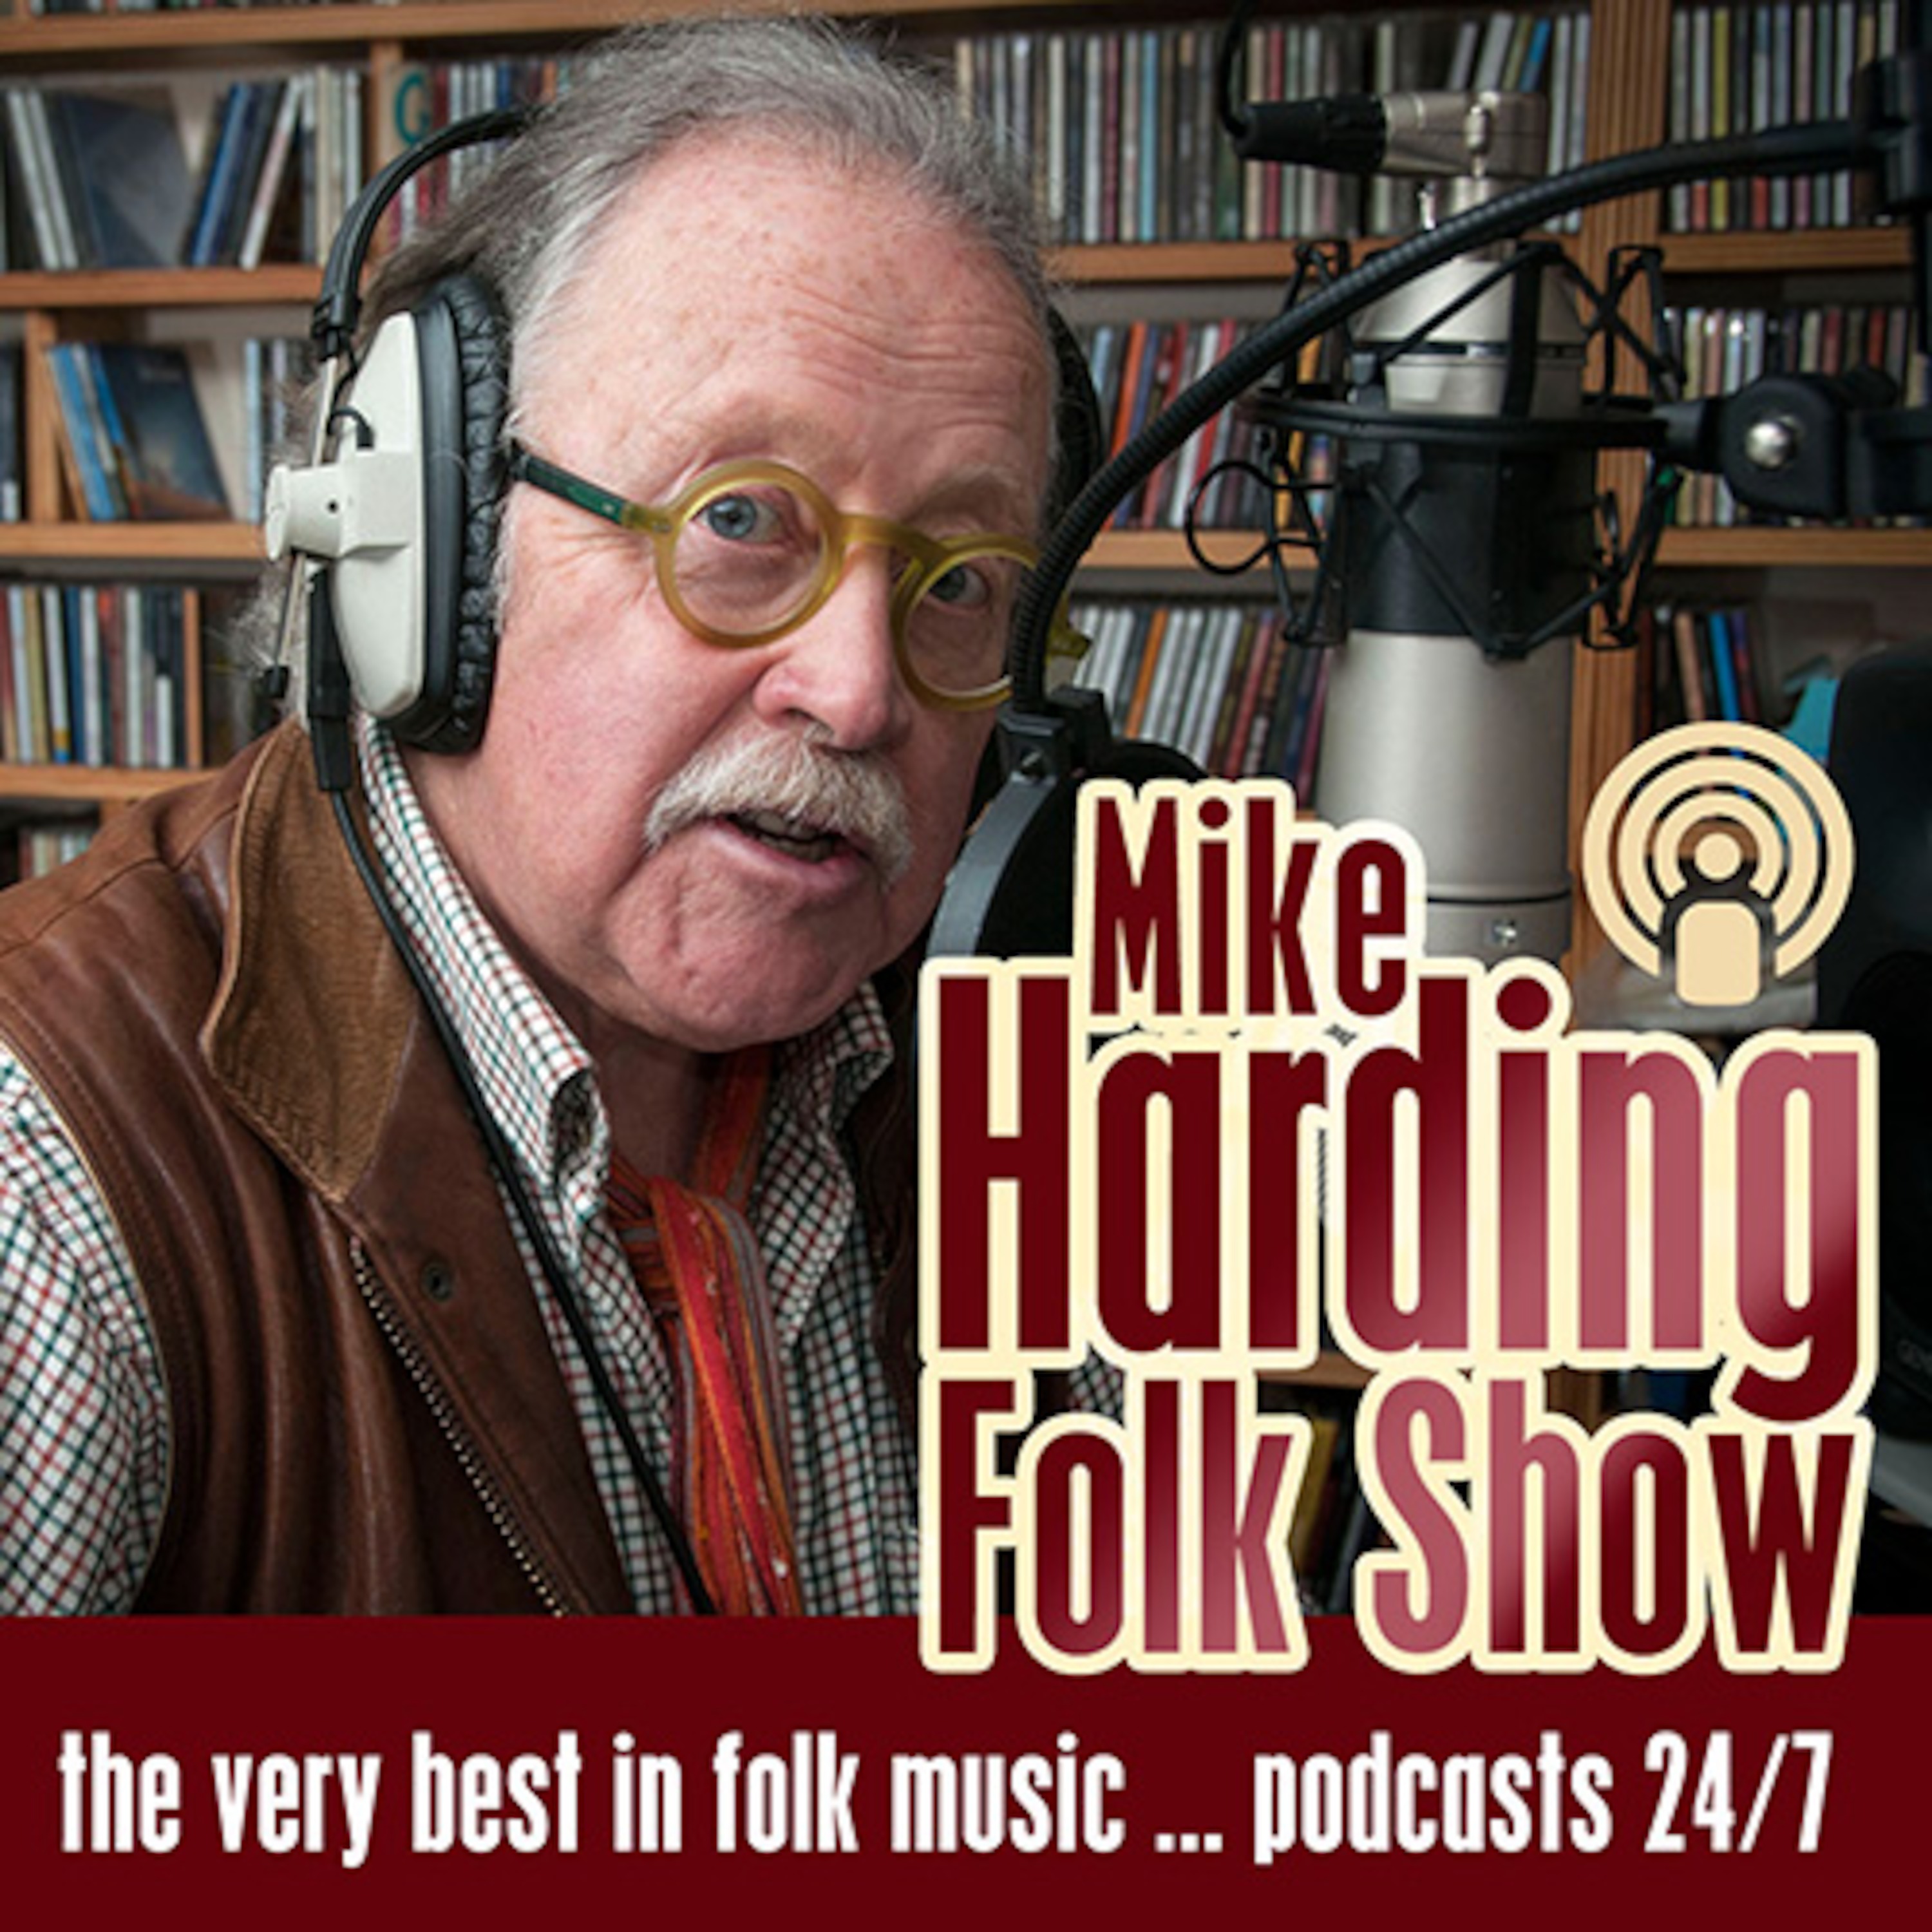 Mike Harding Folk Show 102